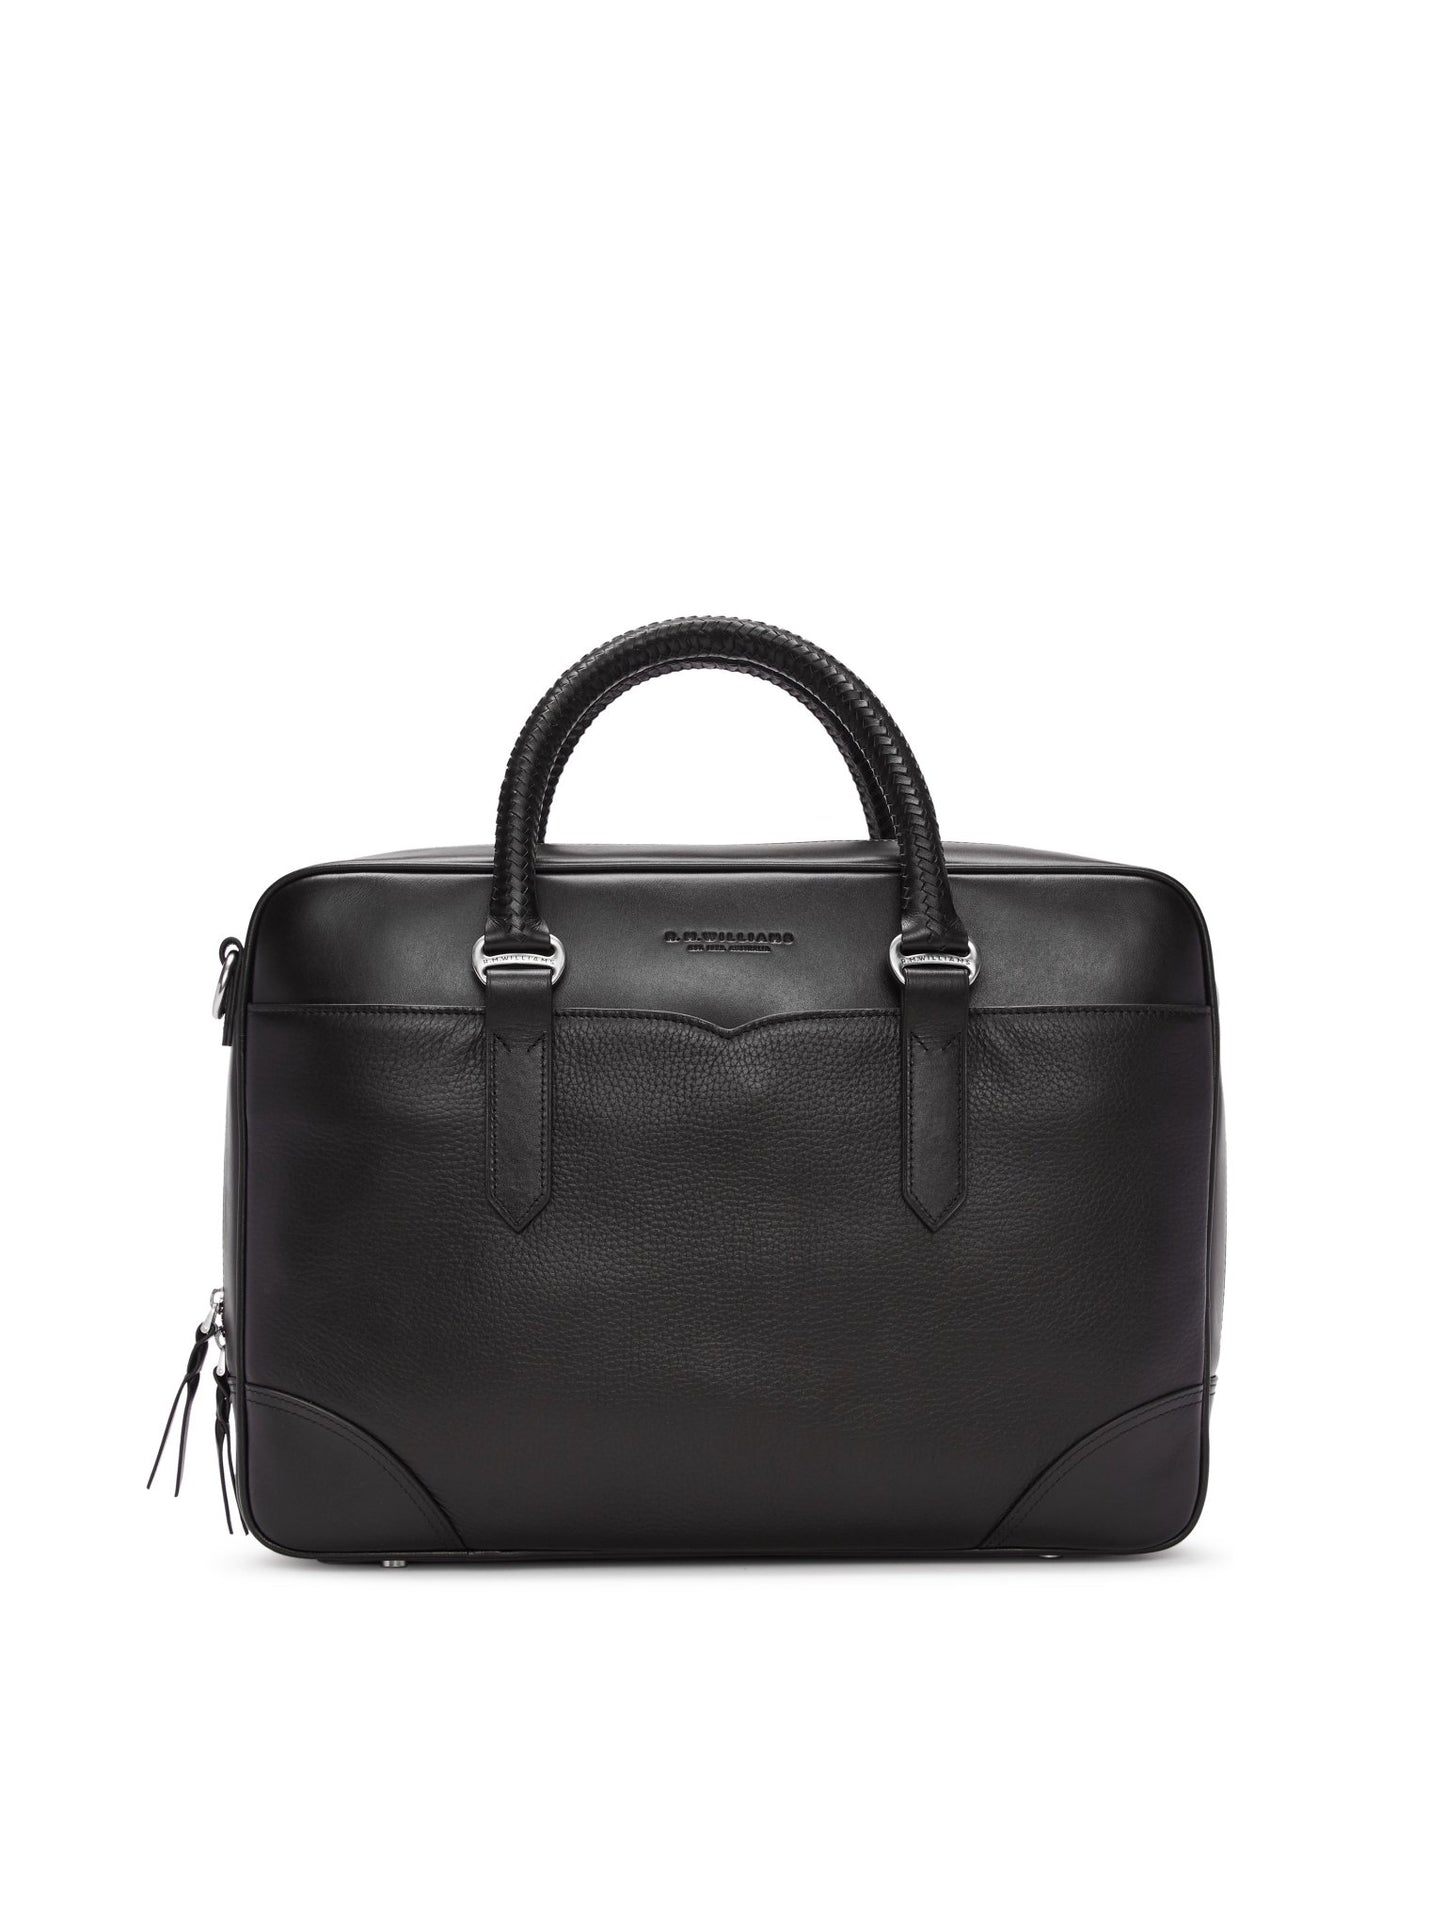 RMW Briefcase - Thomson's Suits Ltd - Black - - 53603